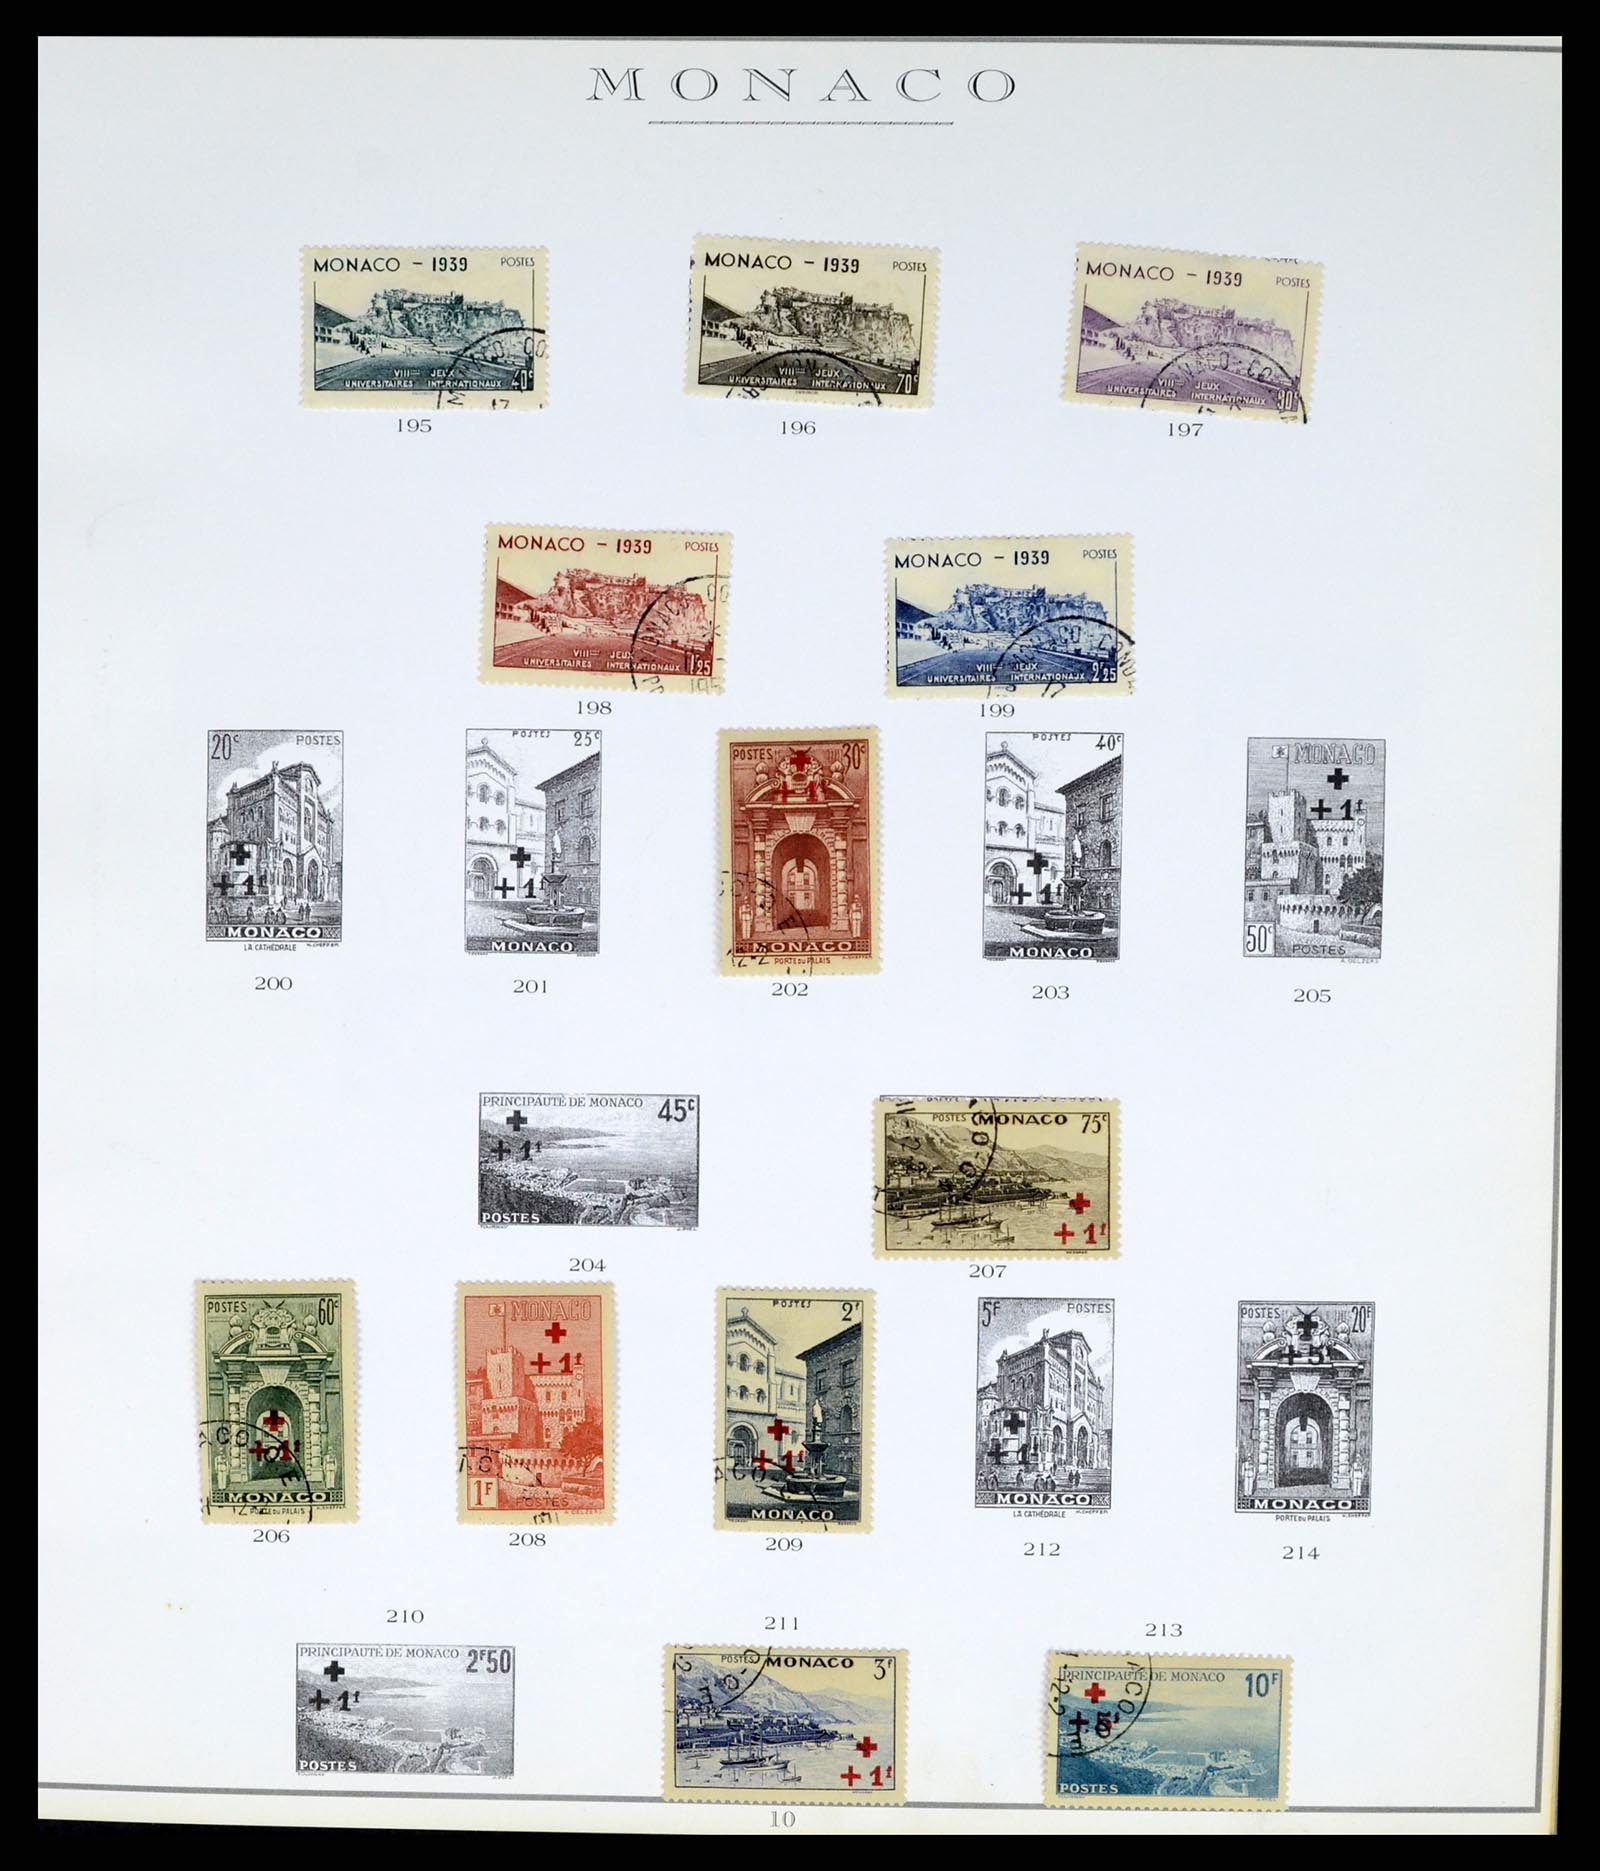 37437 019 - Stamp collection 37437 Monaco 1885-1996.